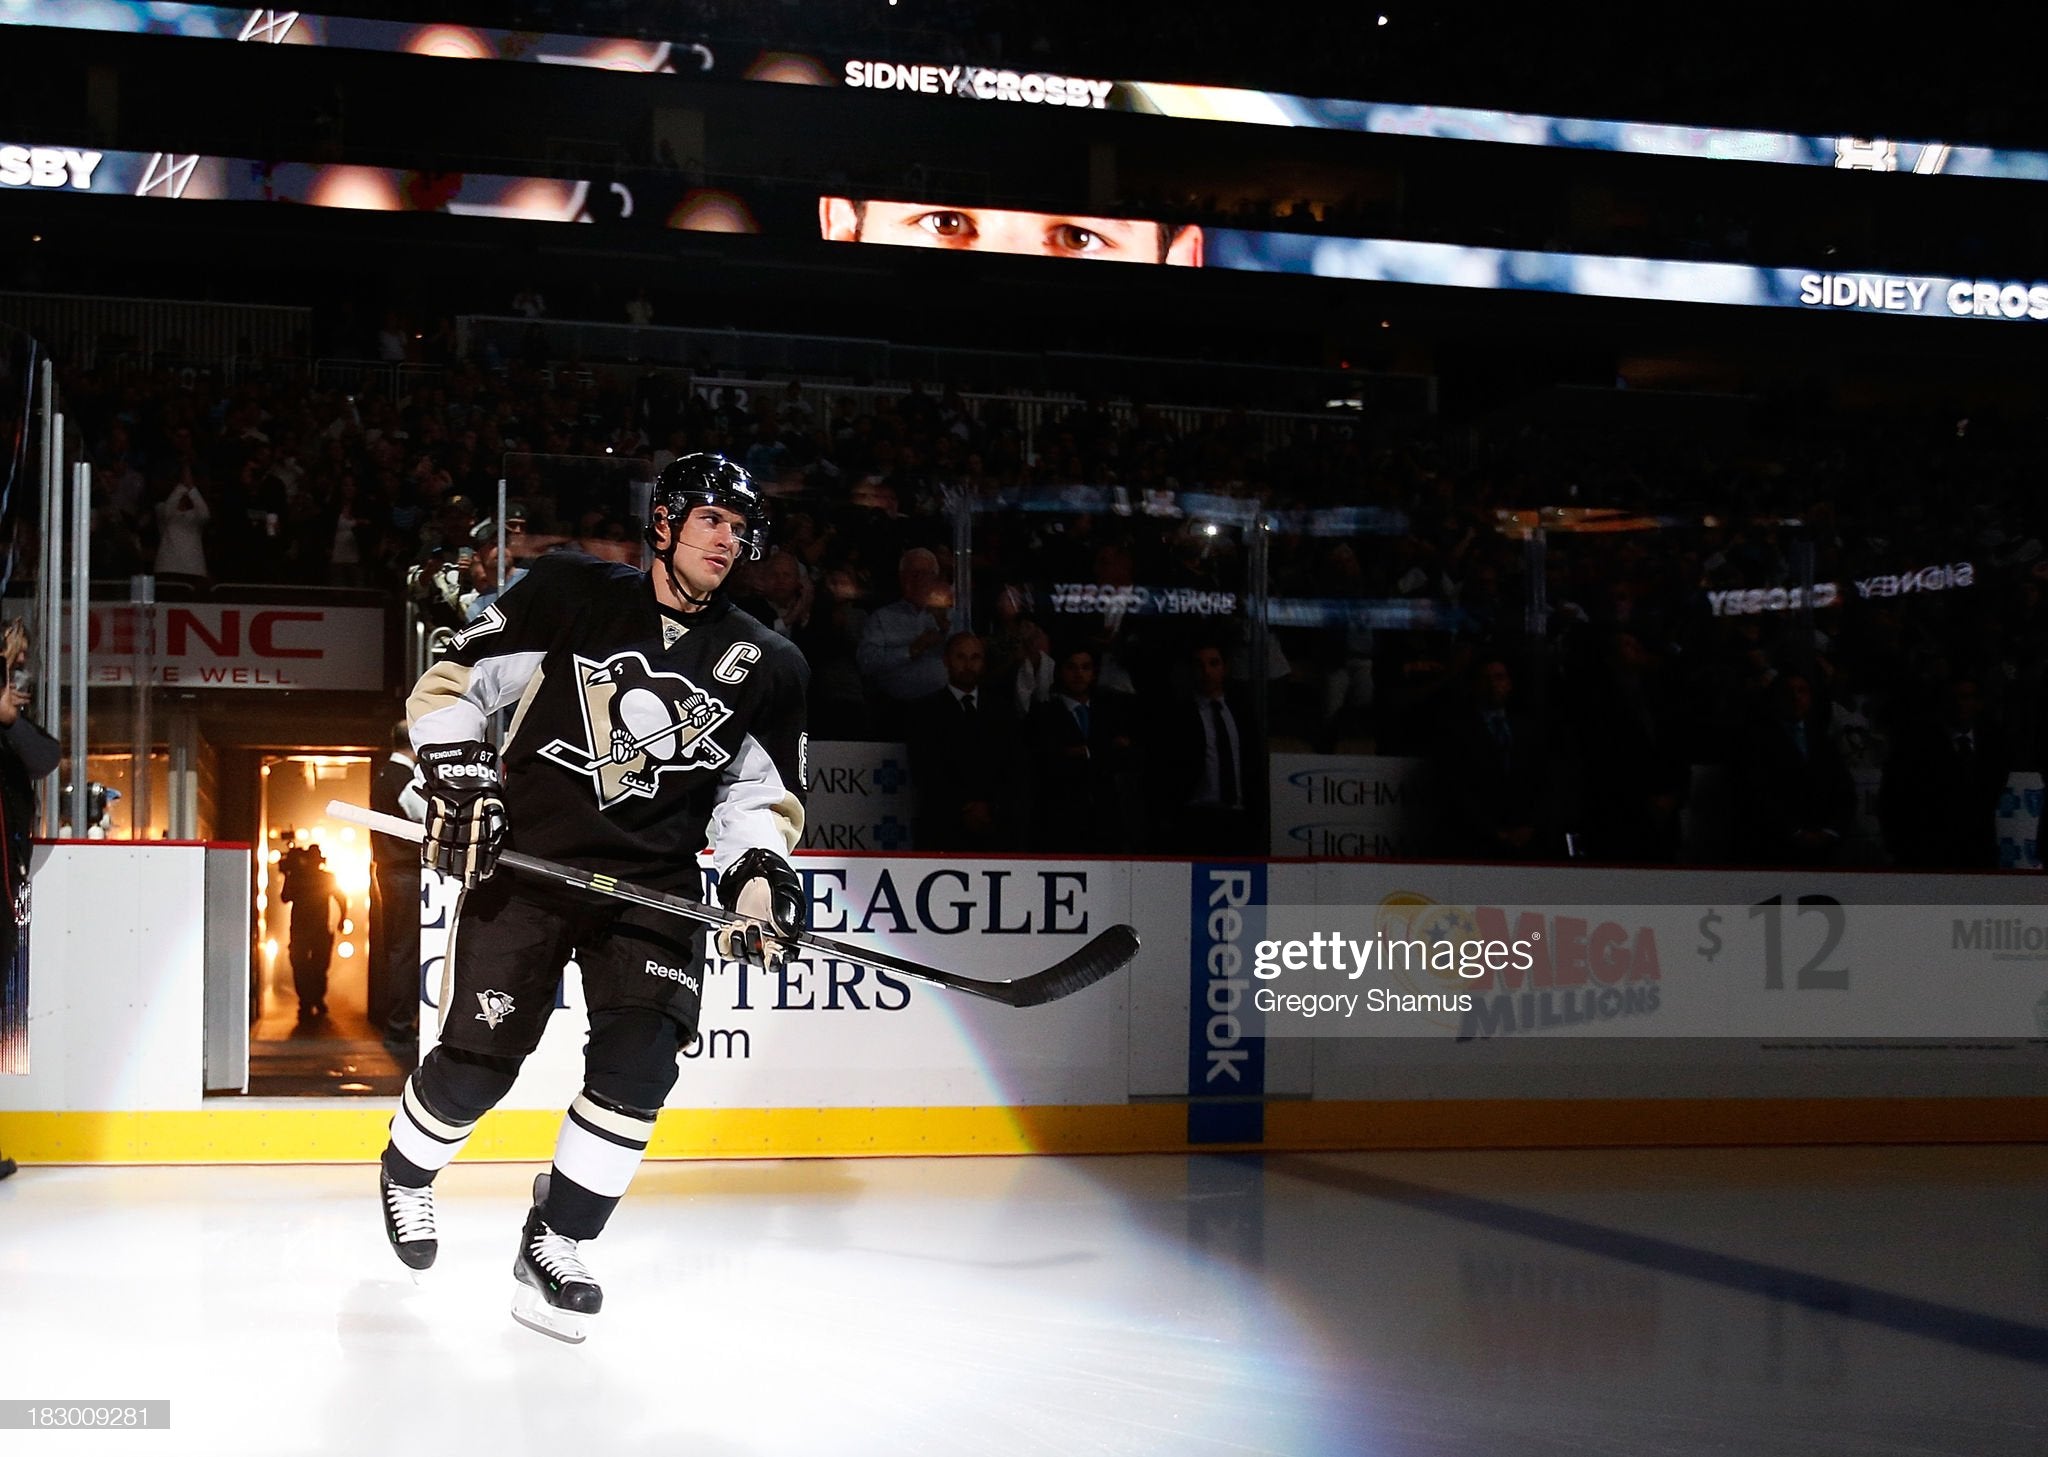 Sidney Crosby Game-Worn Reebok Skates (2013-14)